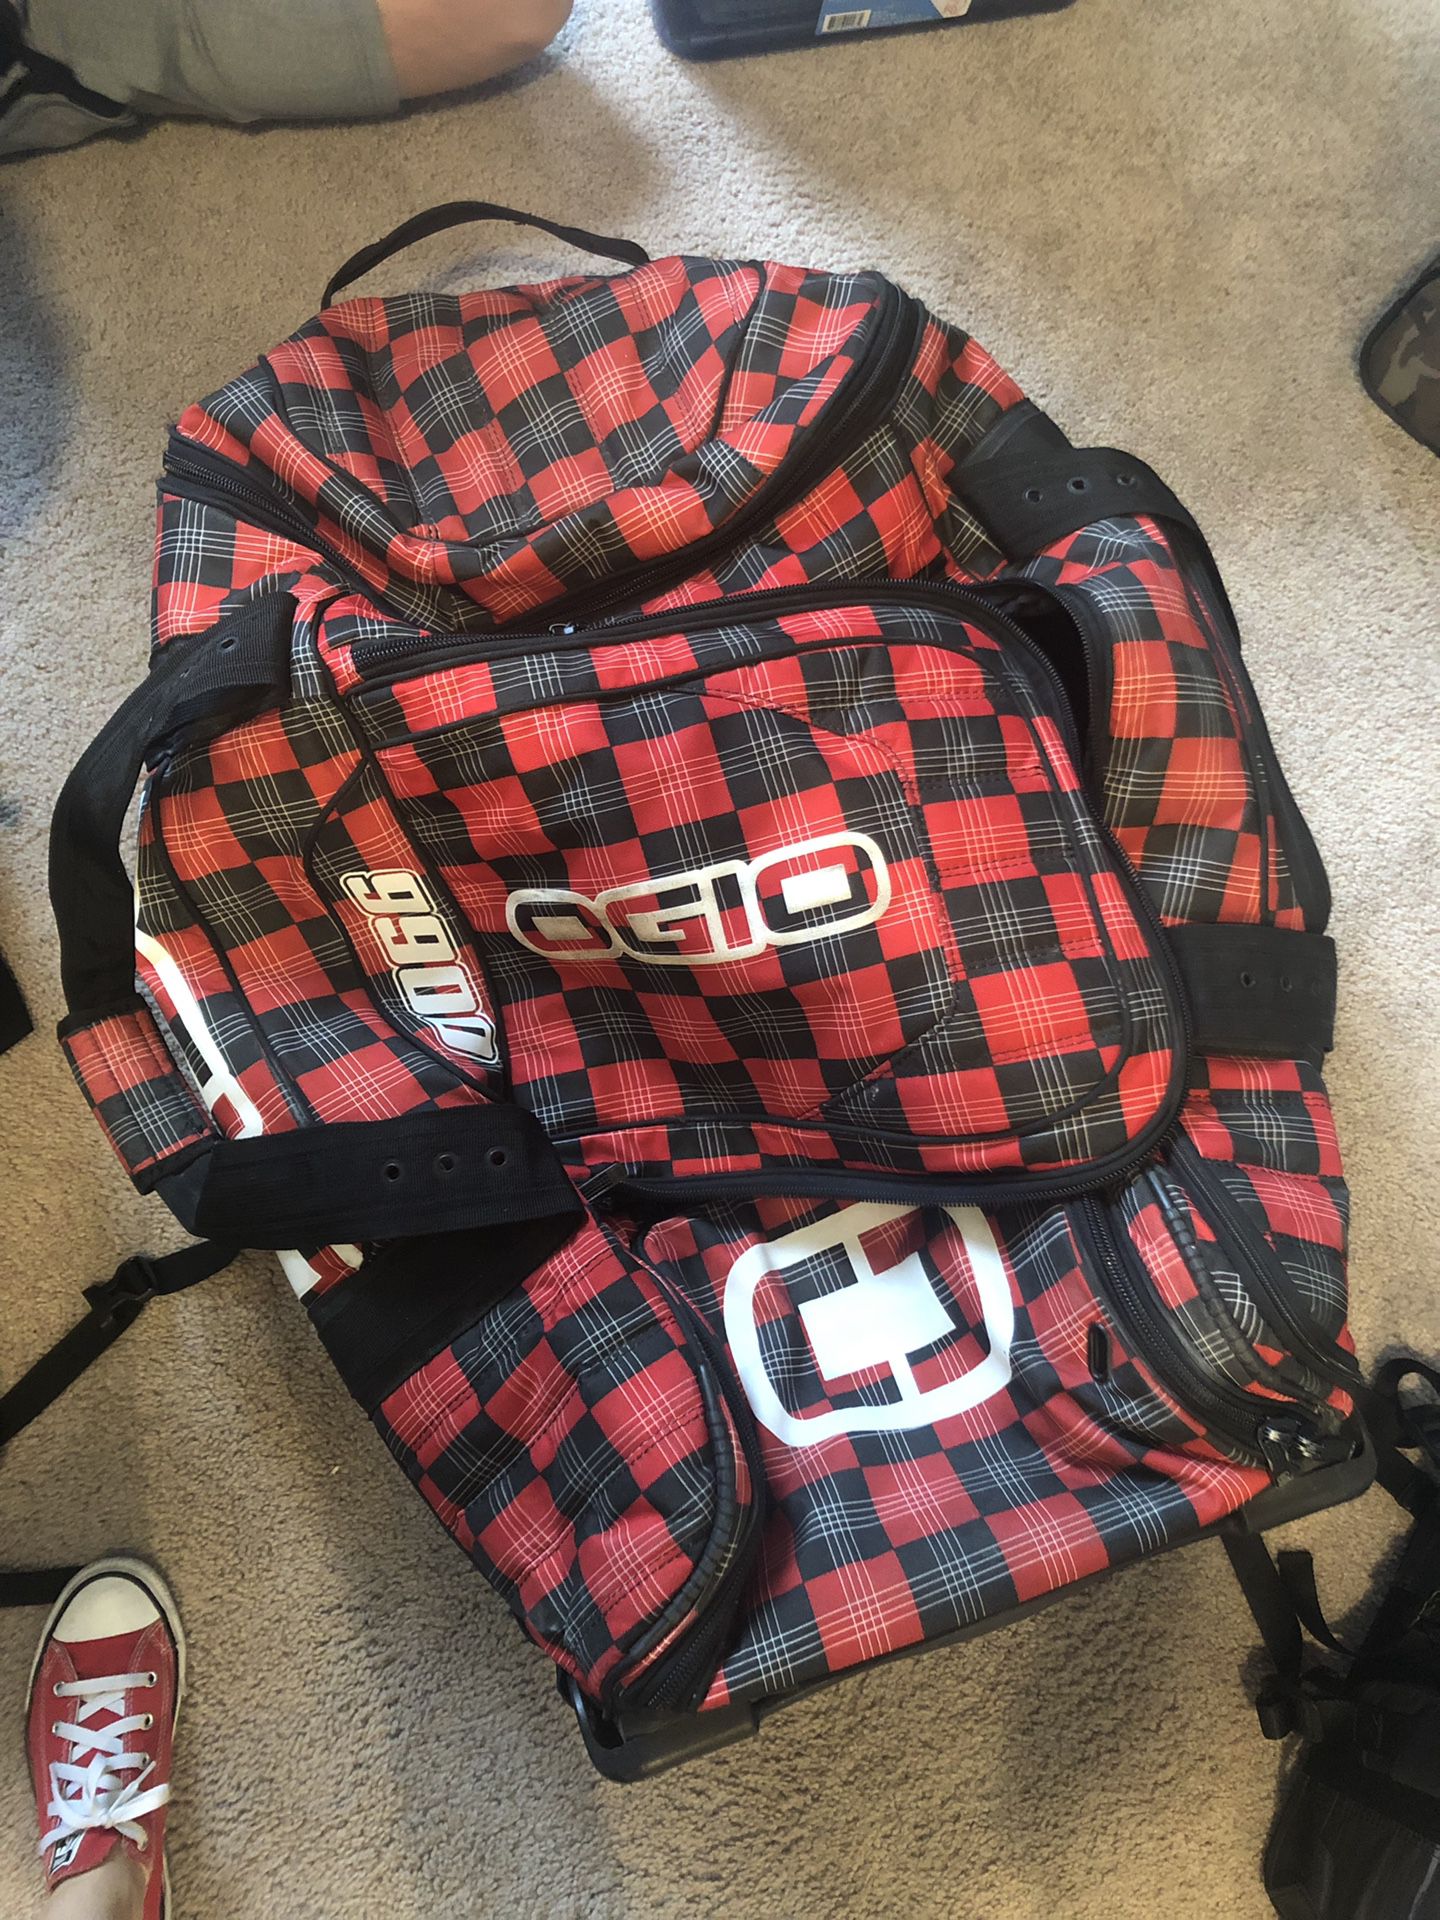 OGIO oversized gear bag